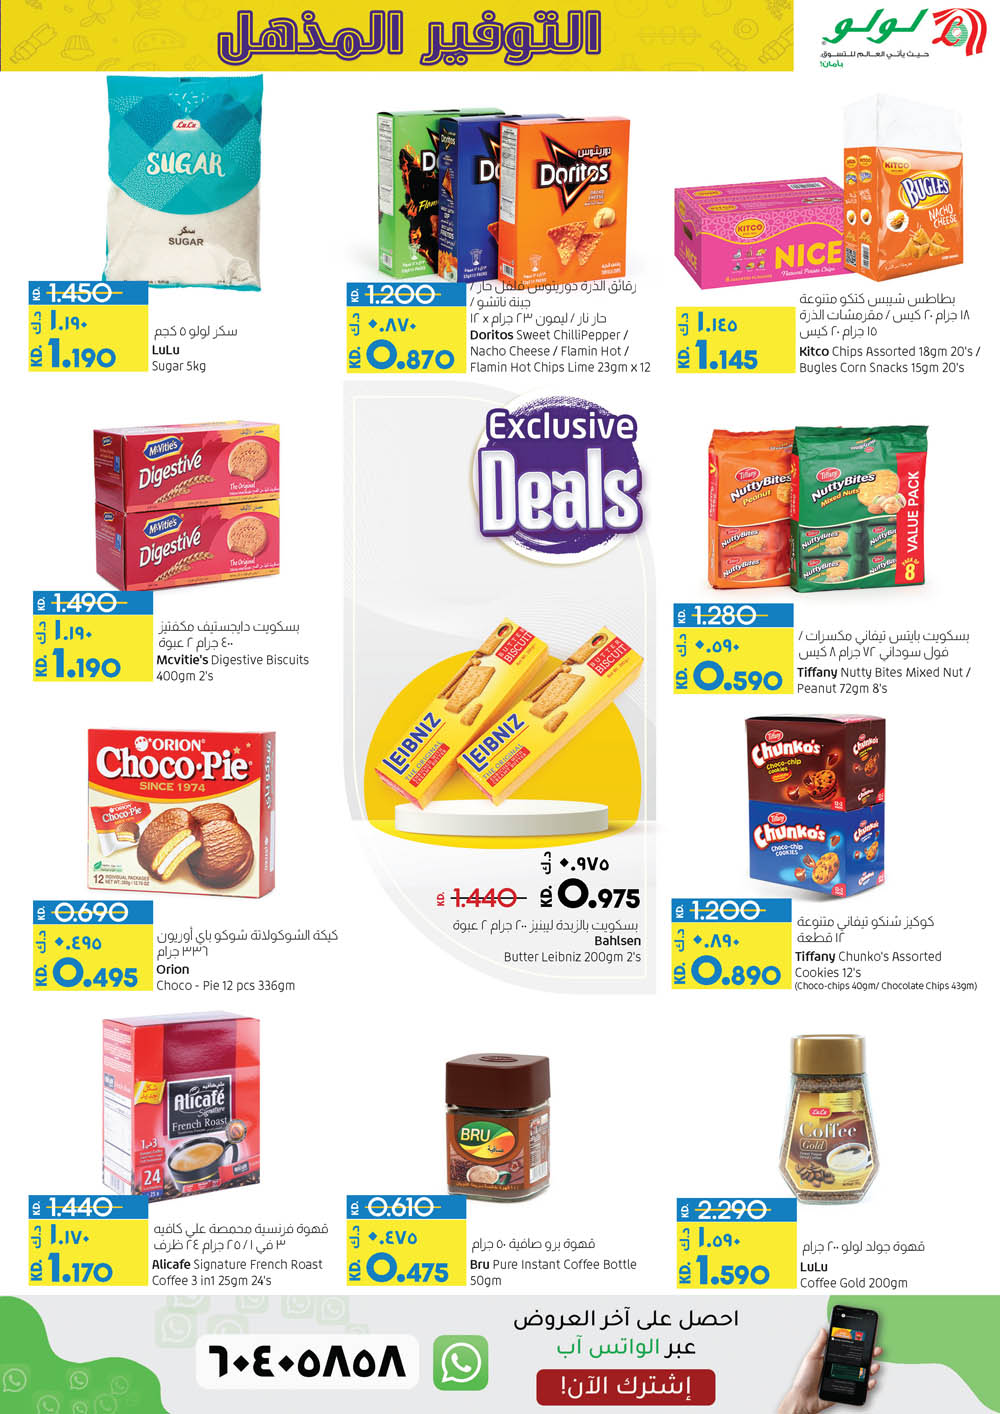 Lulu Hypermarket Sales Offers Super Saver, Latest Promotions January